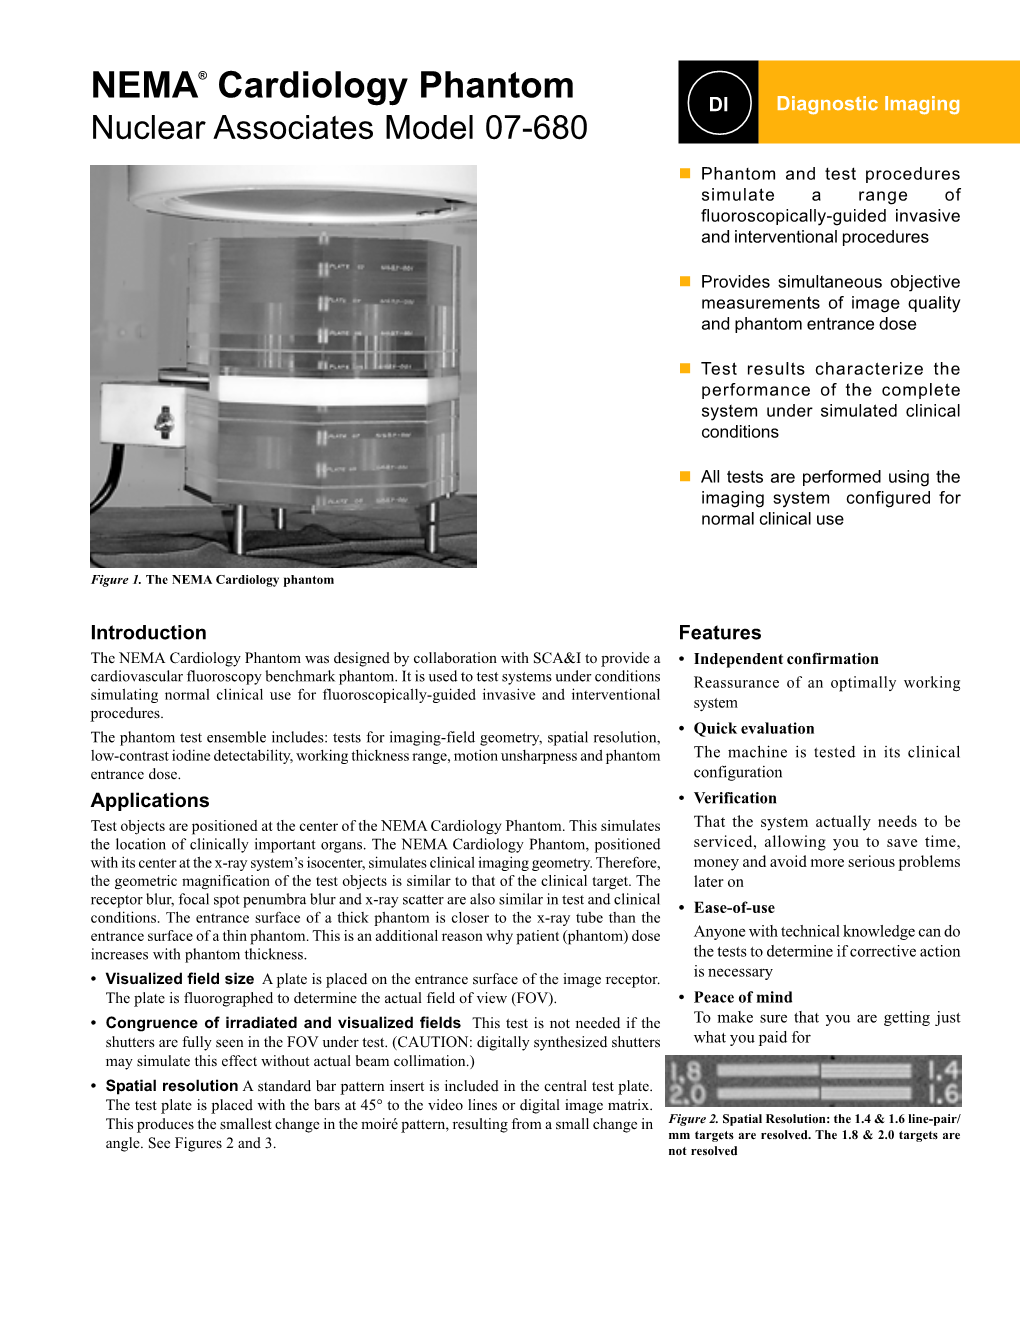 NEMA® Cardiology Phantom DI Diagnostic Imaging Nuclear Associates Model 07-680